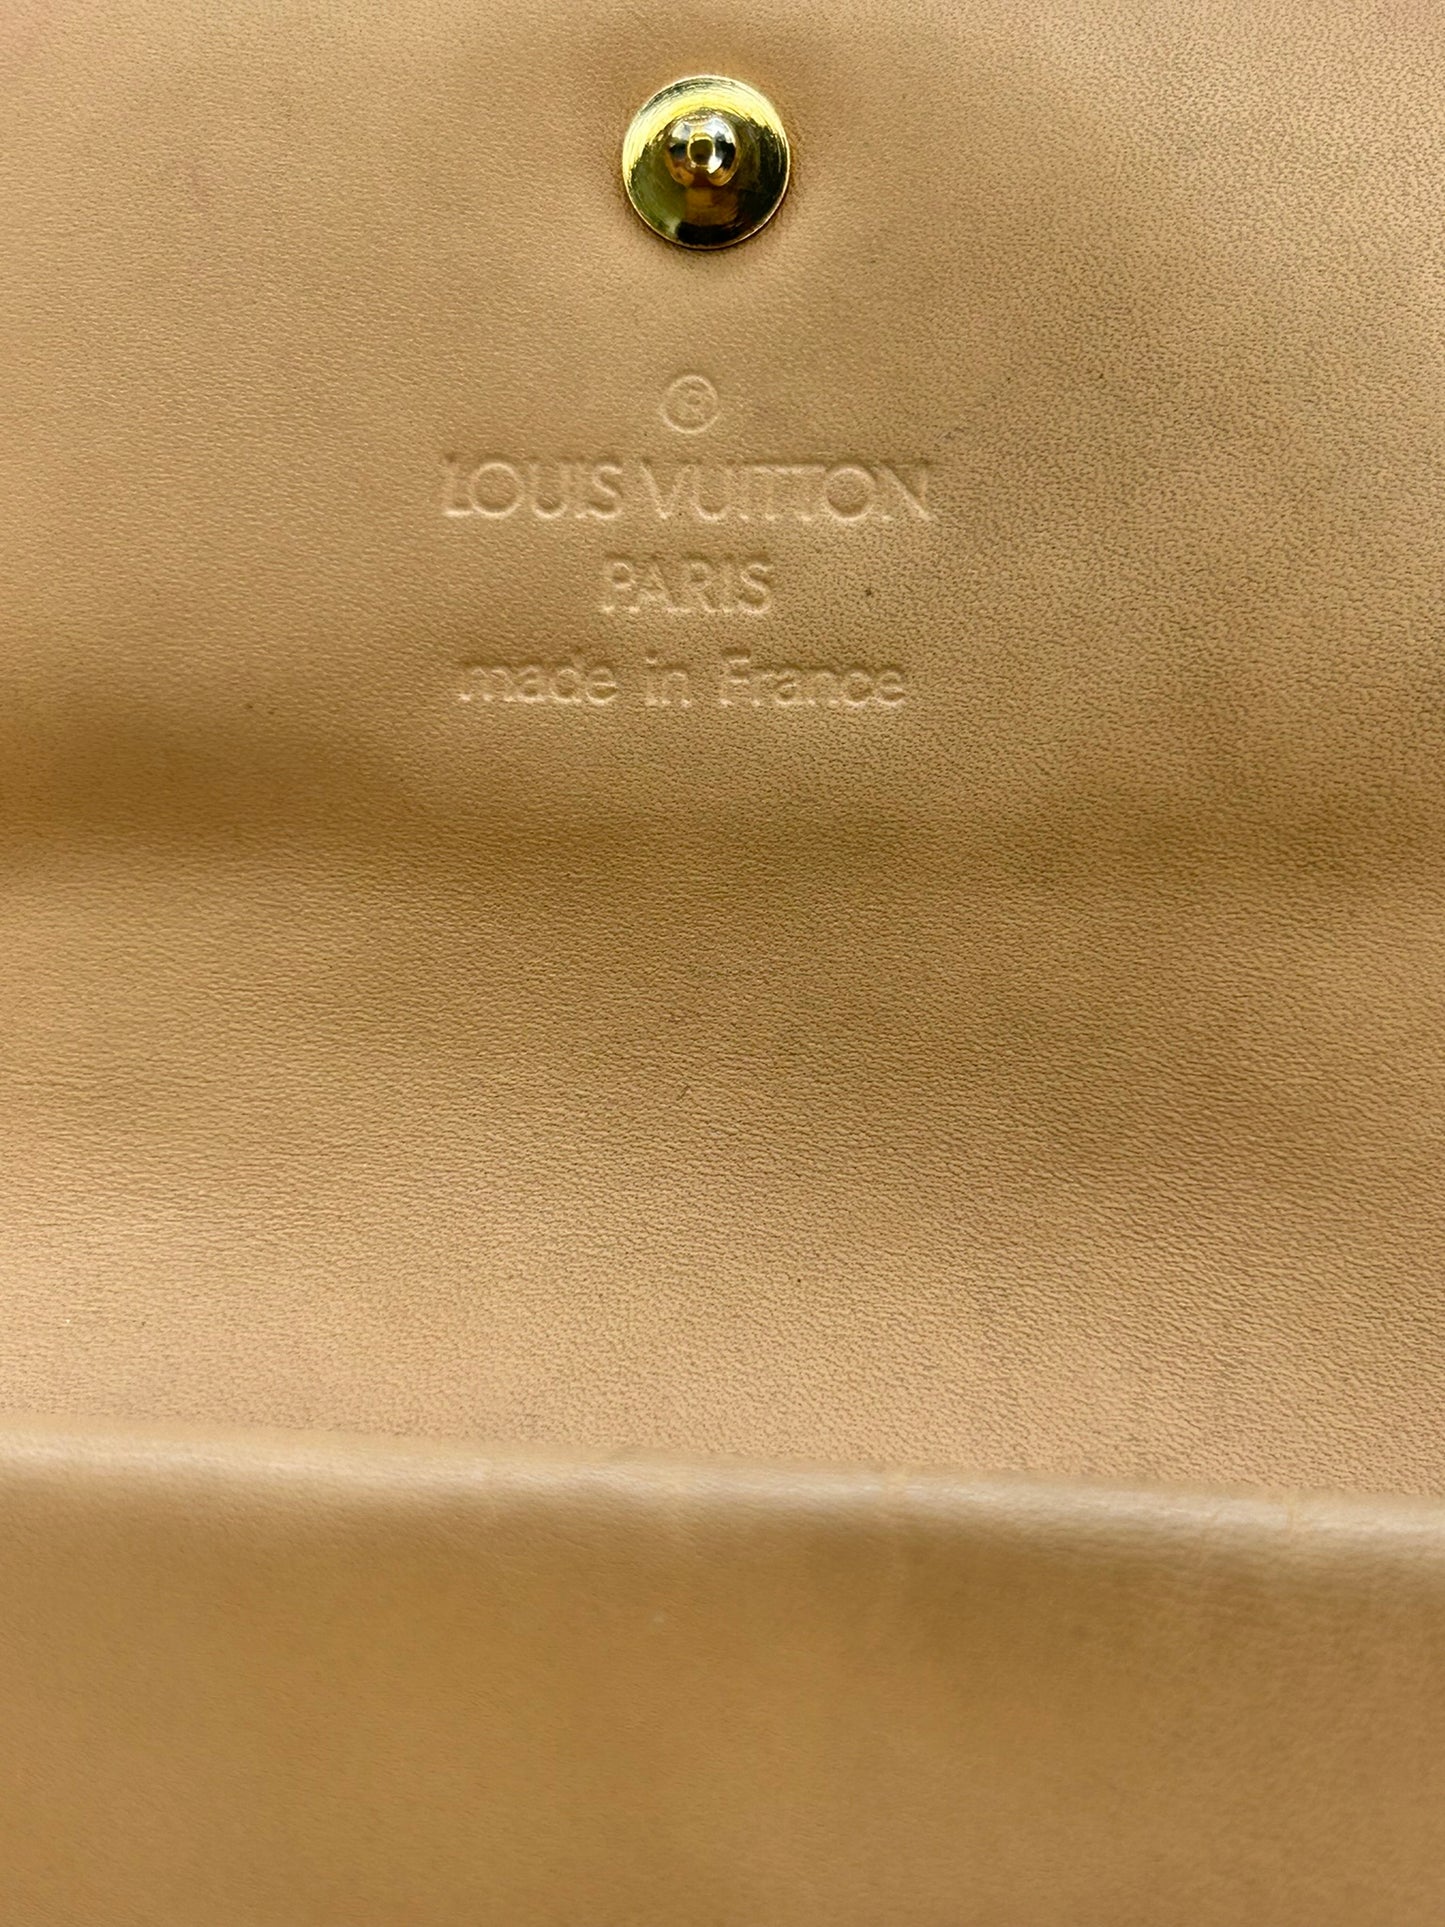 Louis Vuitton Multicolor Monogram Wallet